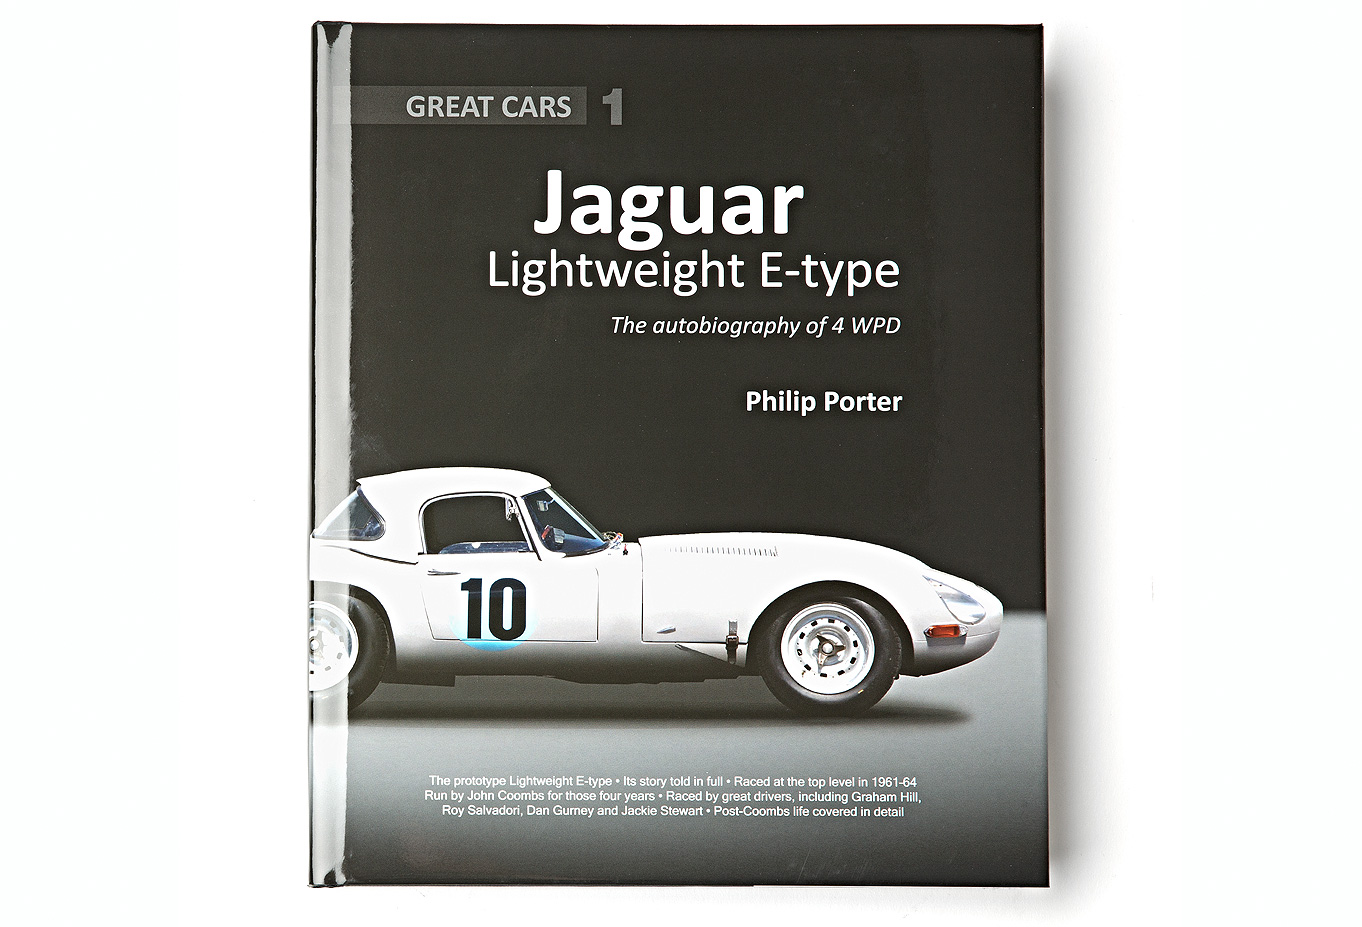 Jaguar Lightweight E-type the autobiography of 4 WPD
Jaguar Ligh